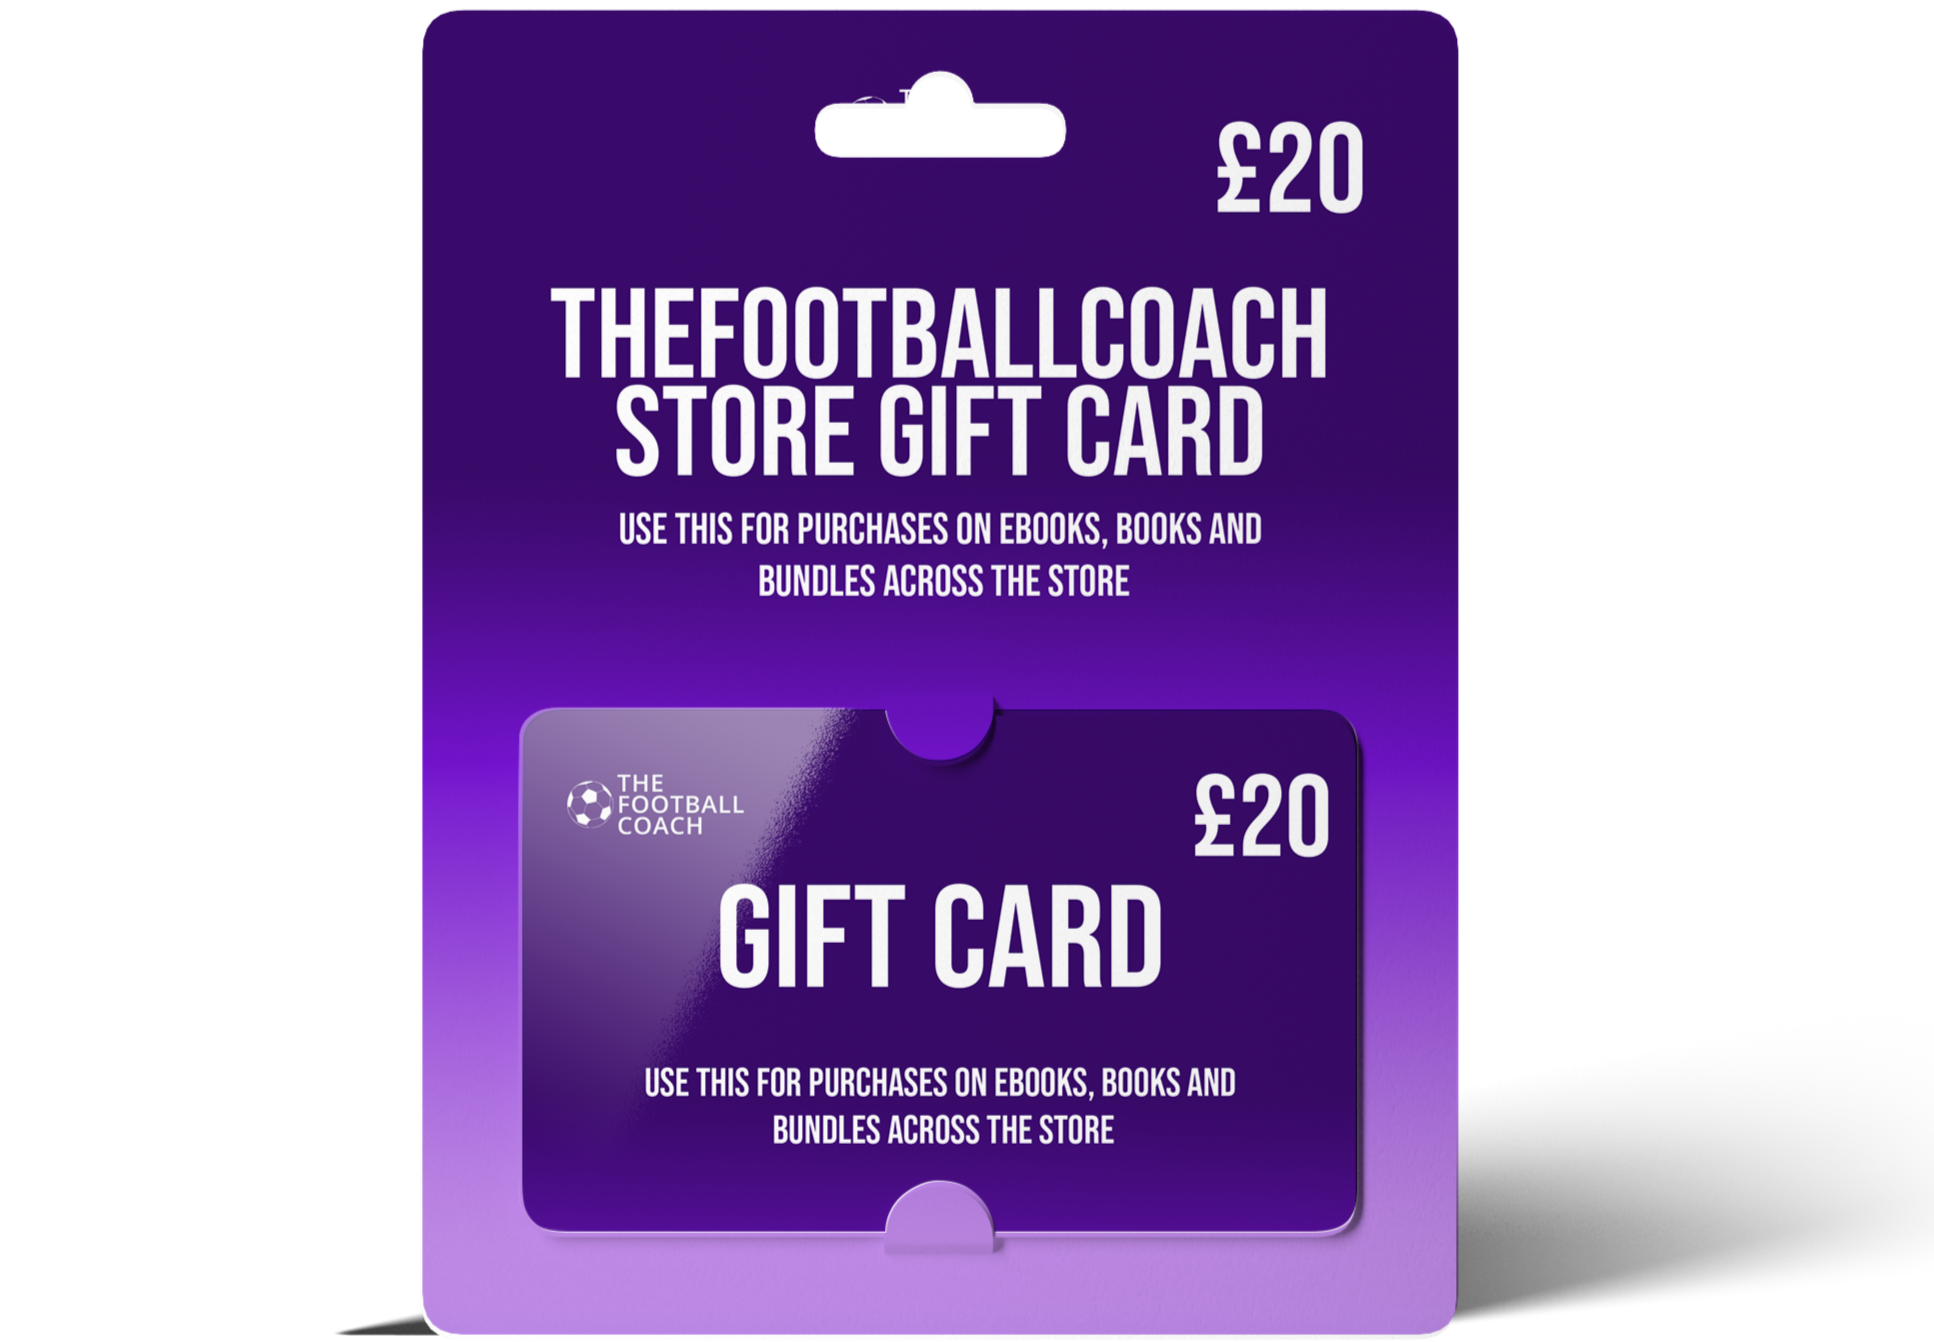 TheFootballCoach Gift Card